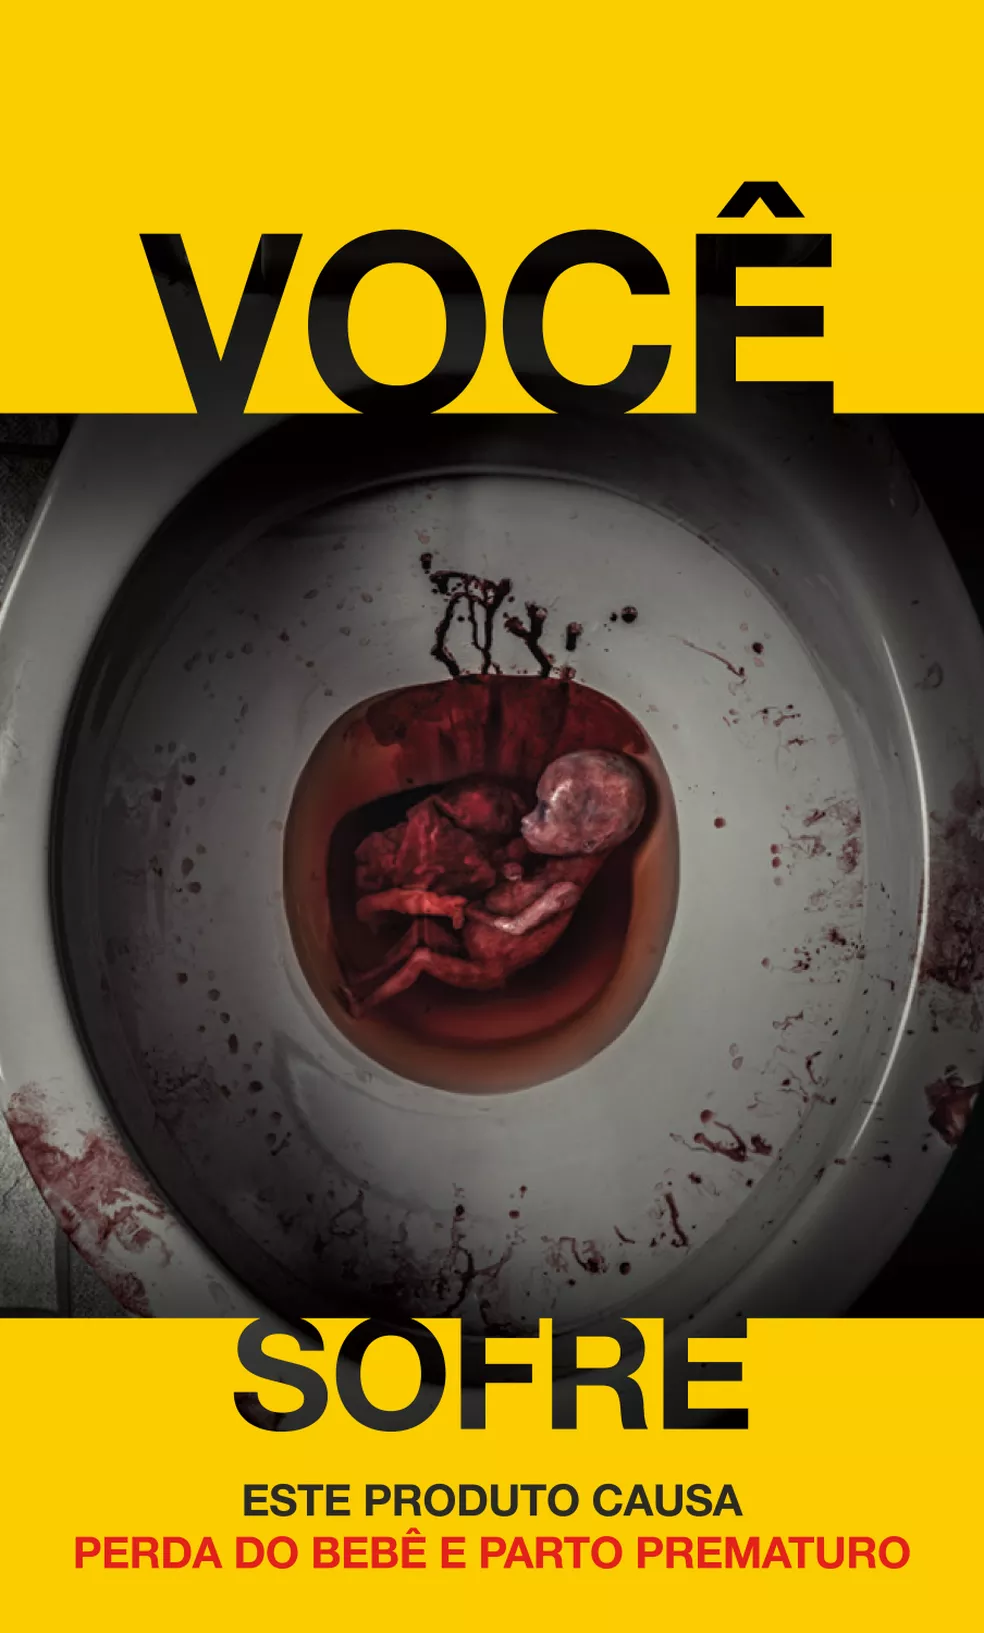 Brazilian anti-tobacco propaganda: A bleeding red fetus inside a white porcelain toilet